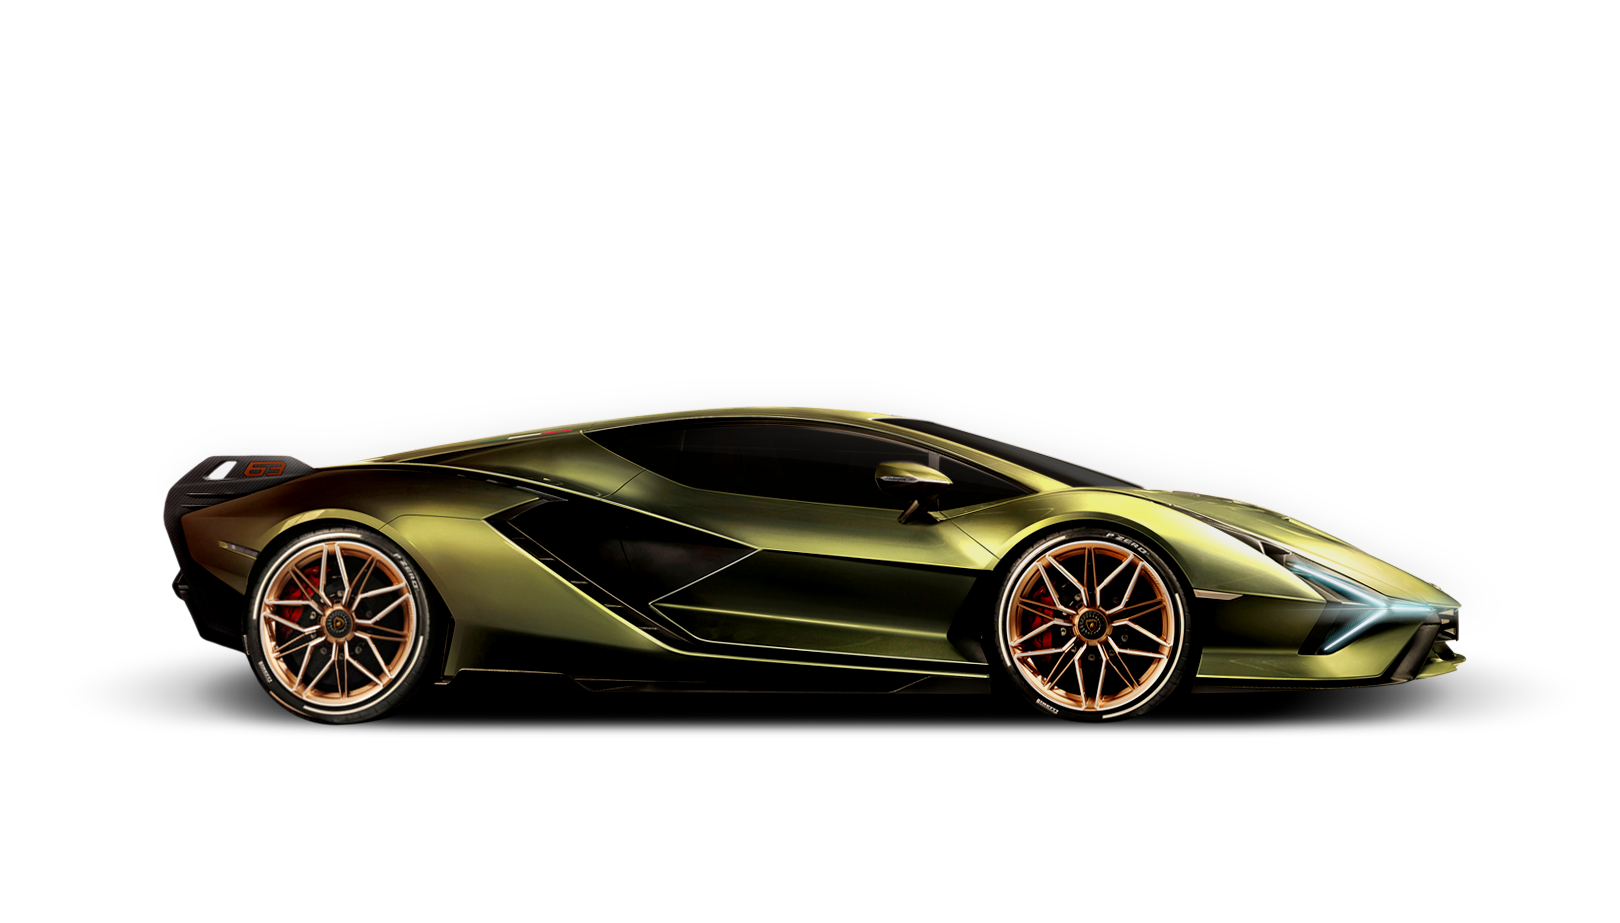 Automobili Lamborghini - Official Website 